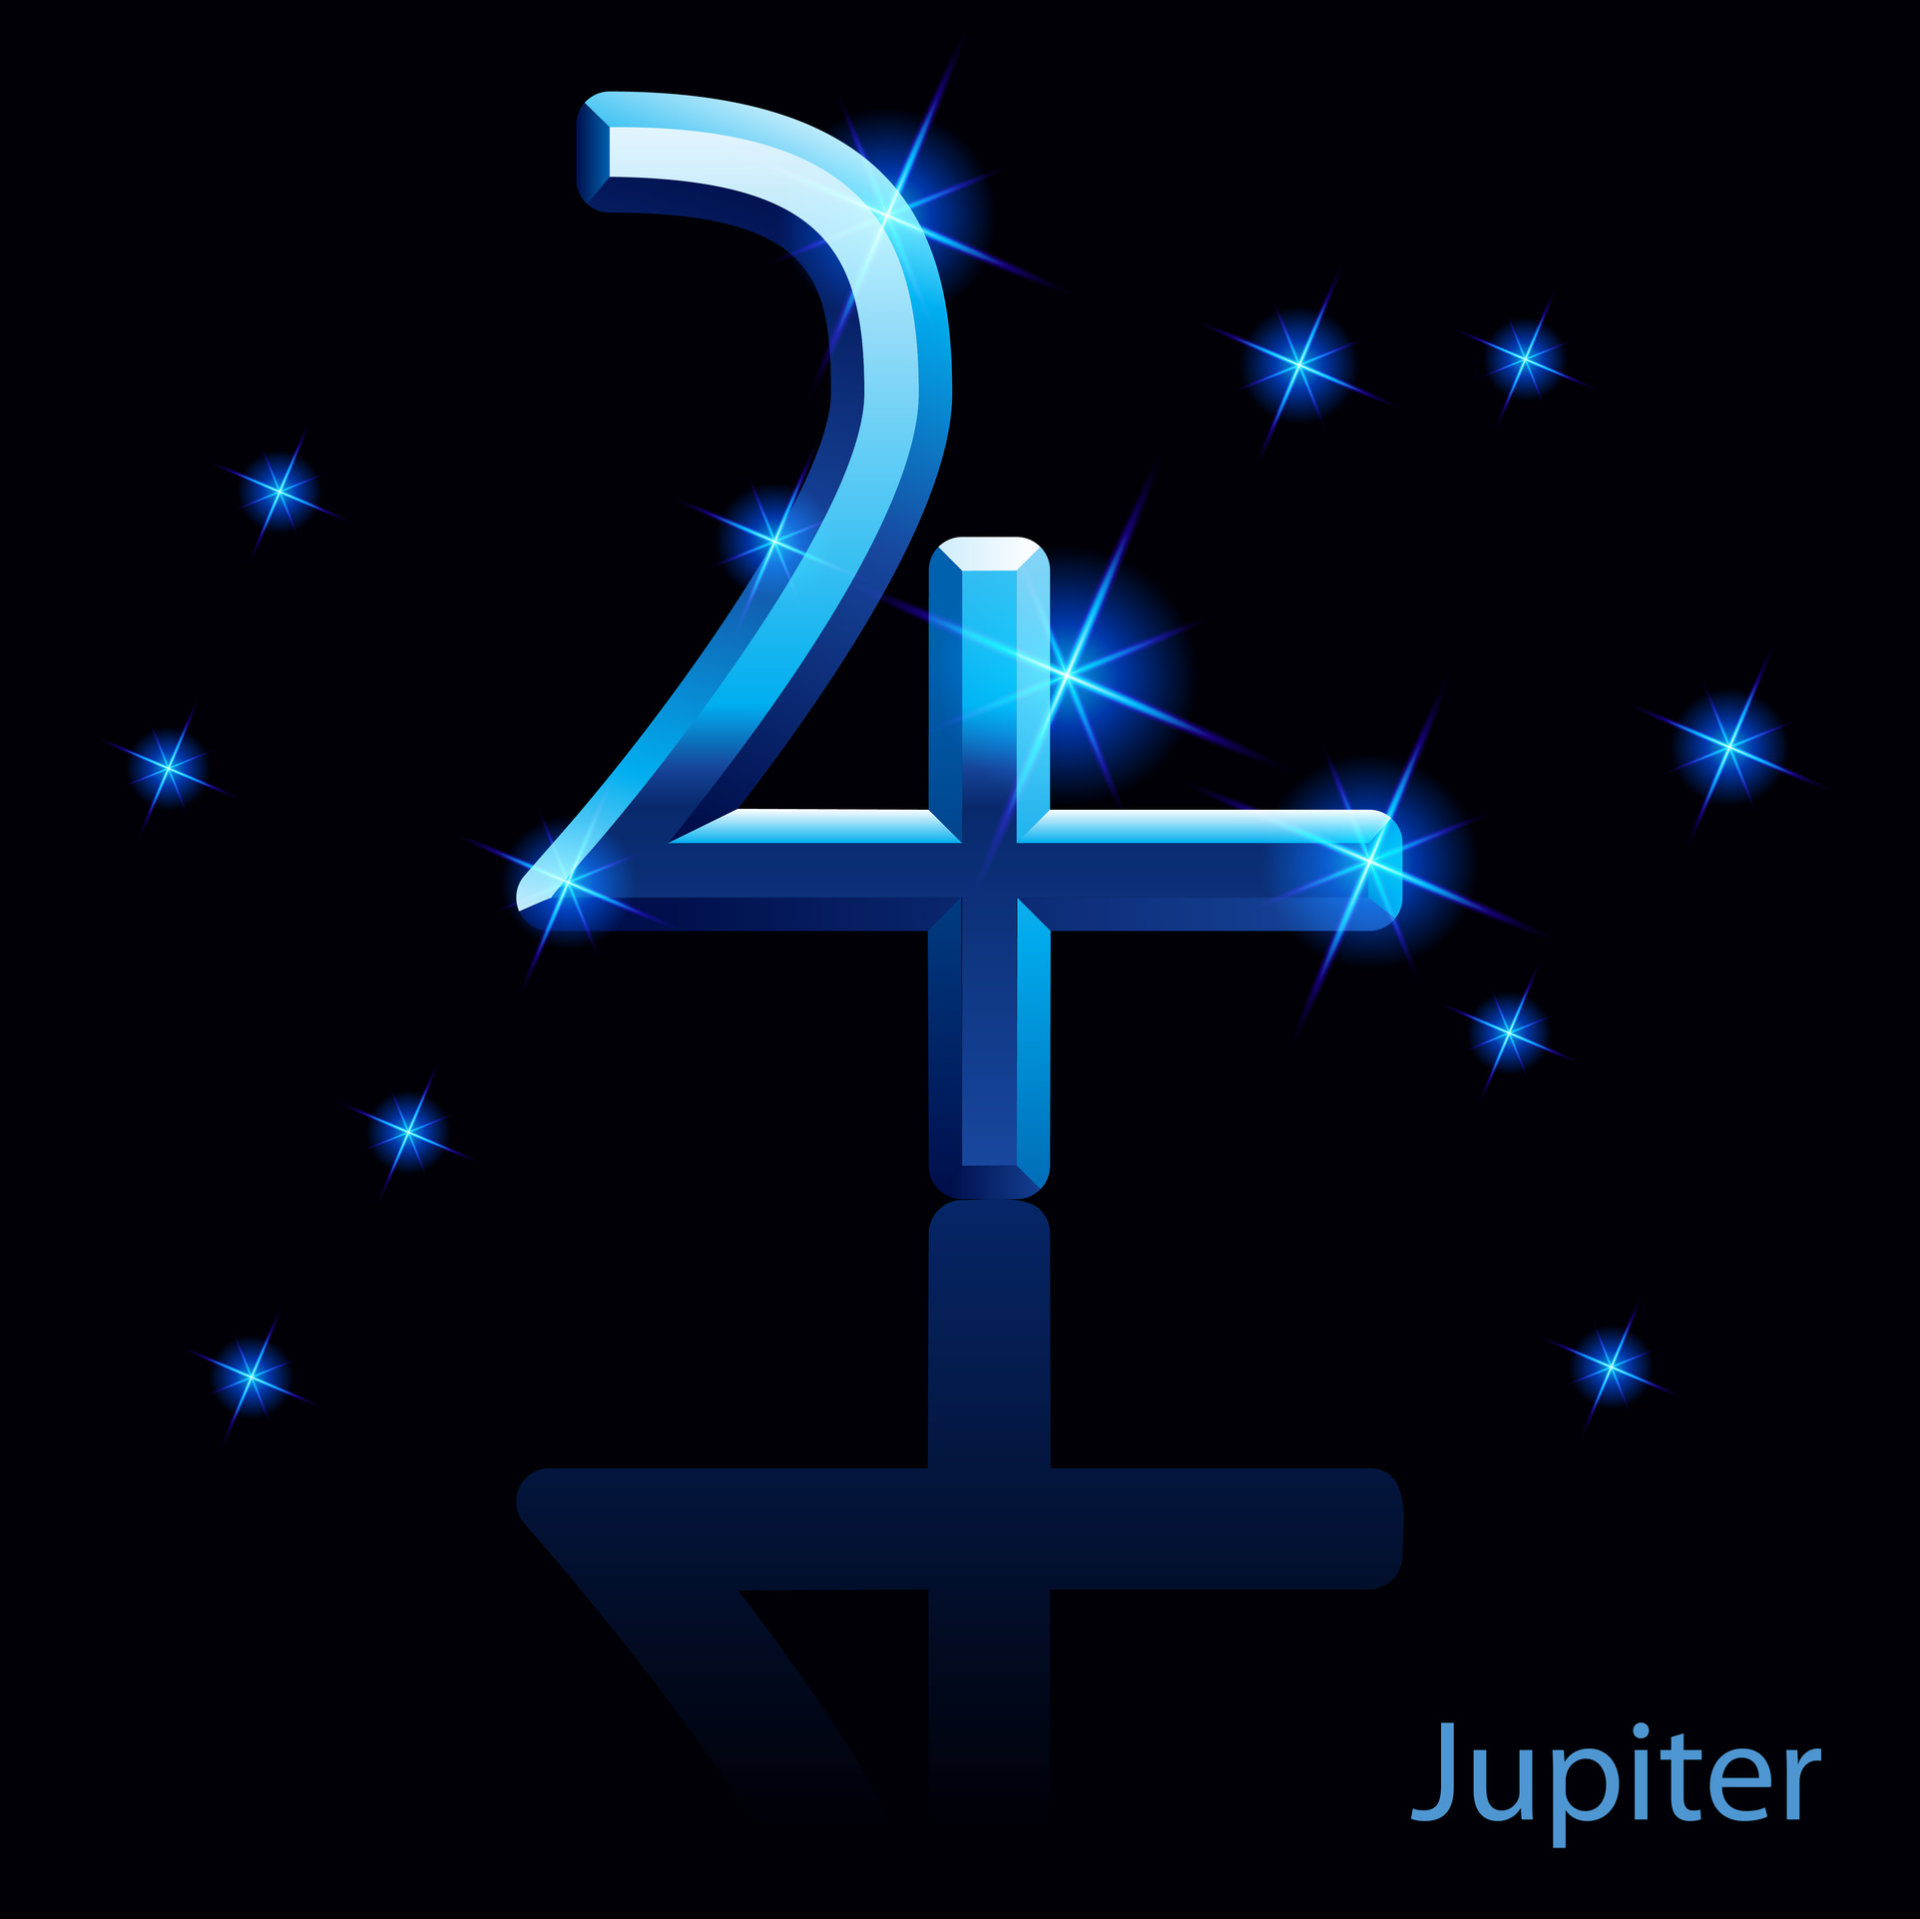 Jupiteris astrologija